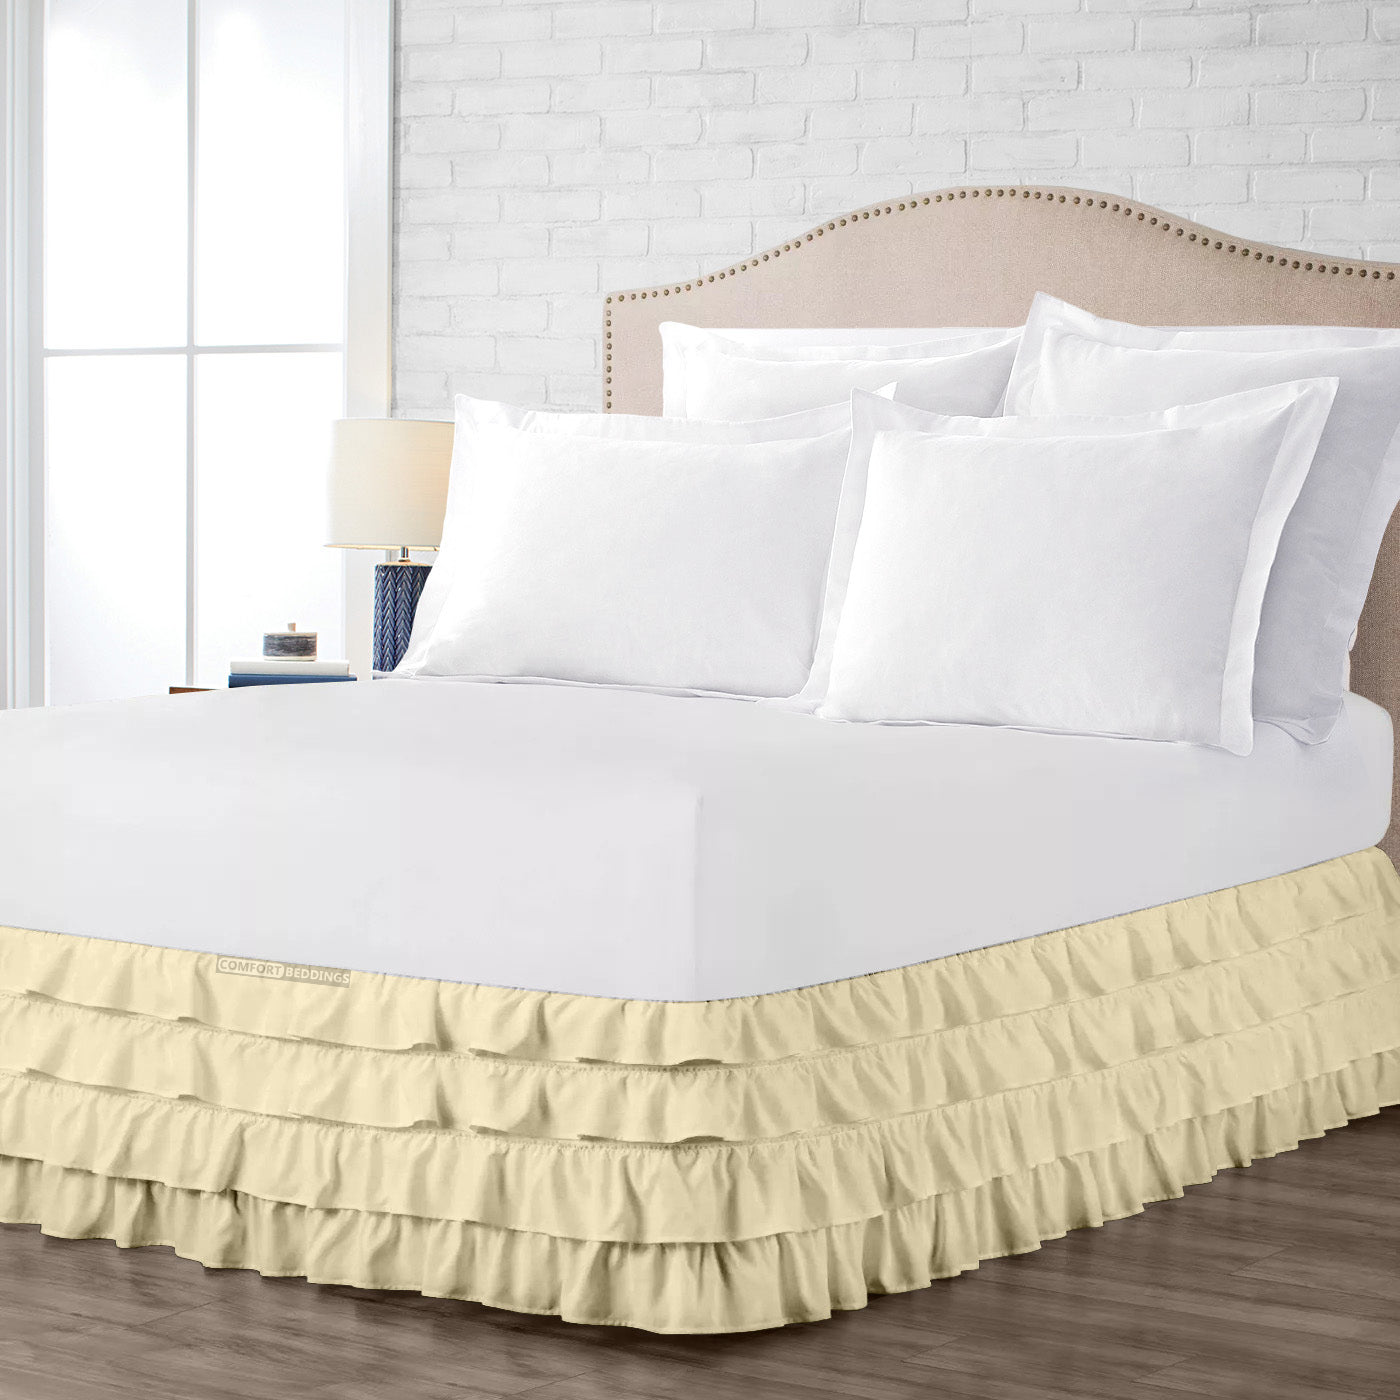 Elegant Ivory waterfall ruffled bed skirt